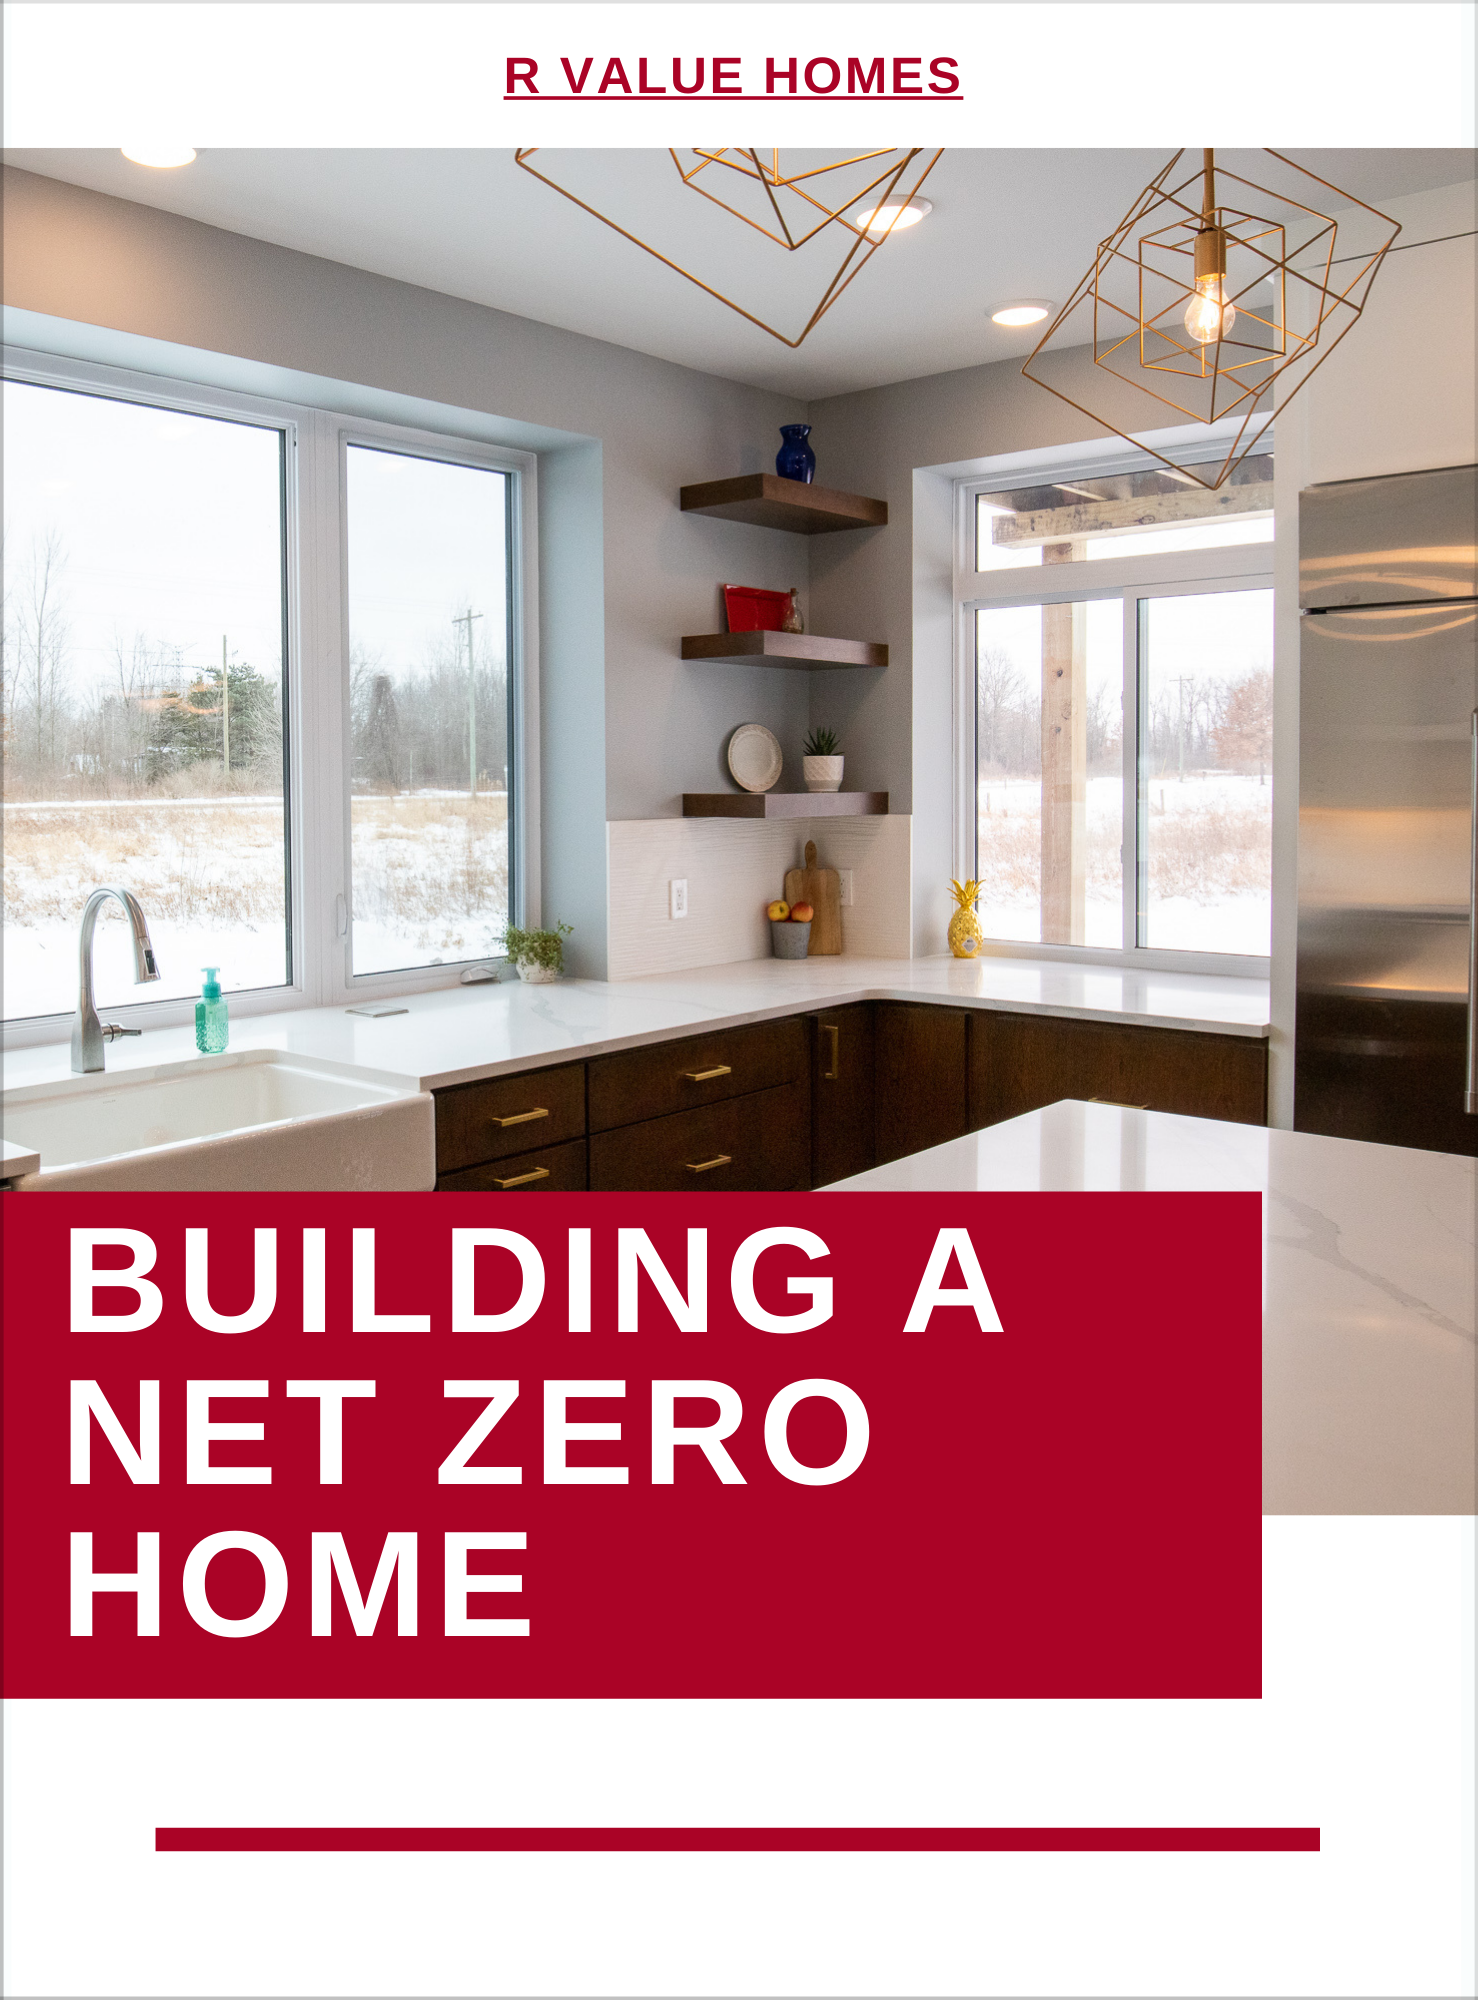 Building a Net Zero Home in Michigan